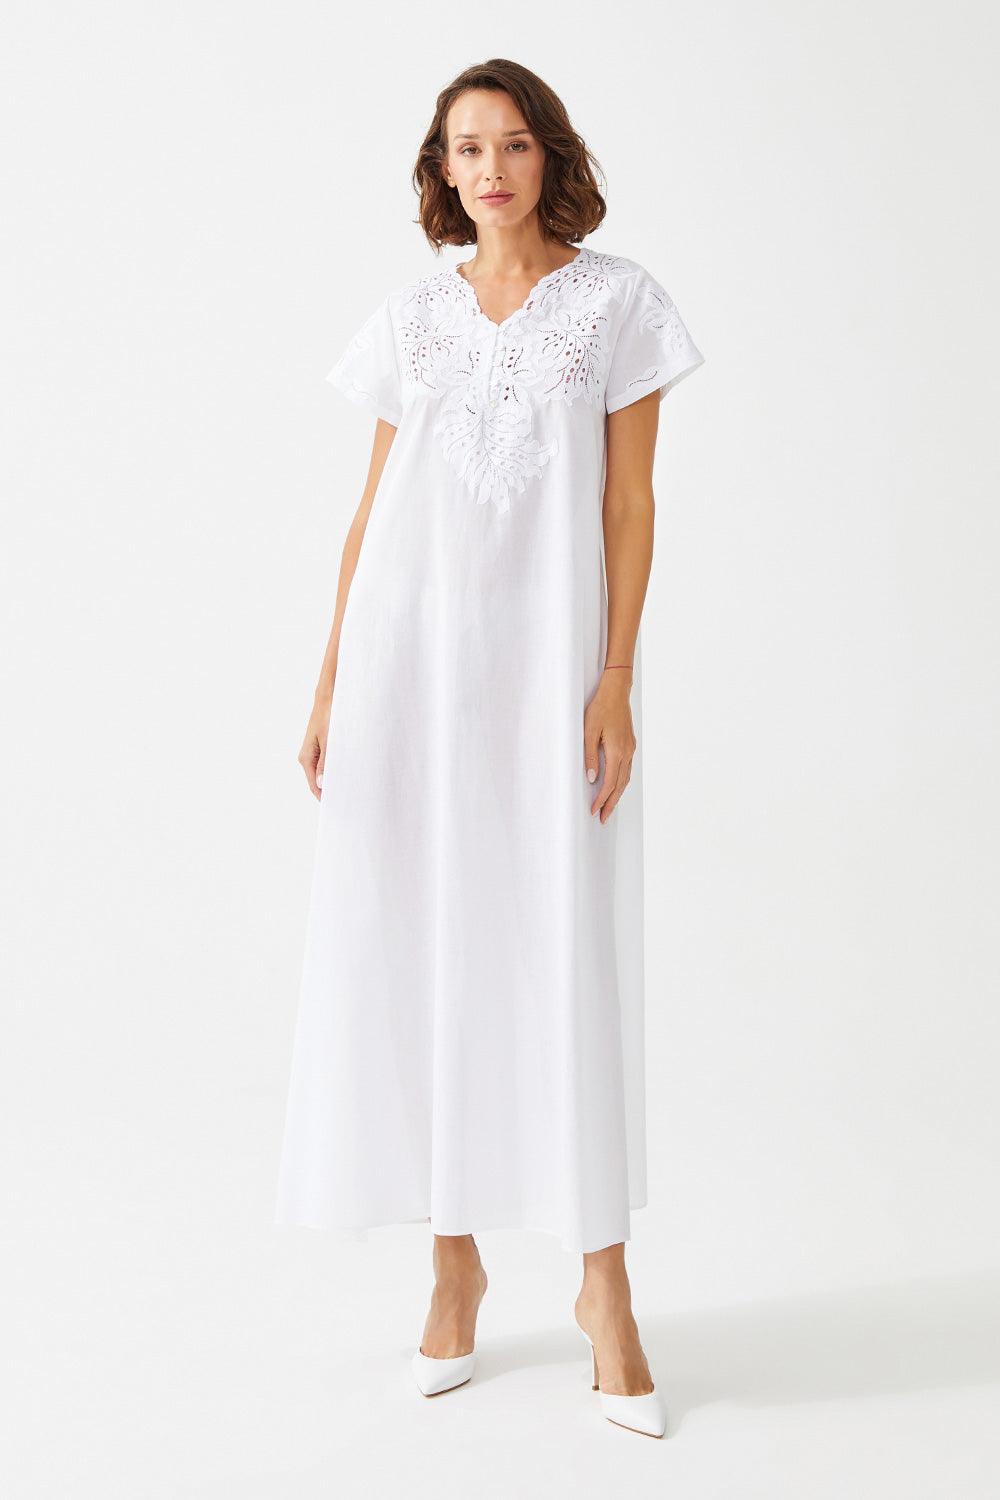 Chenar Long Cotton Voile Trimmed Half Sleeve Dress - Bocan